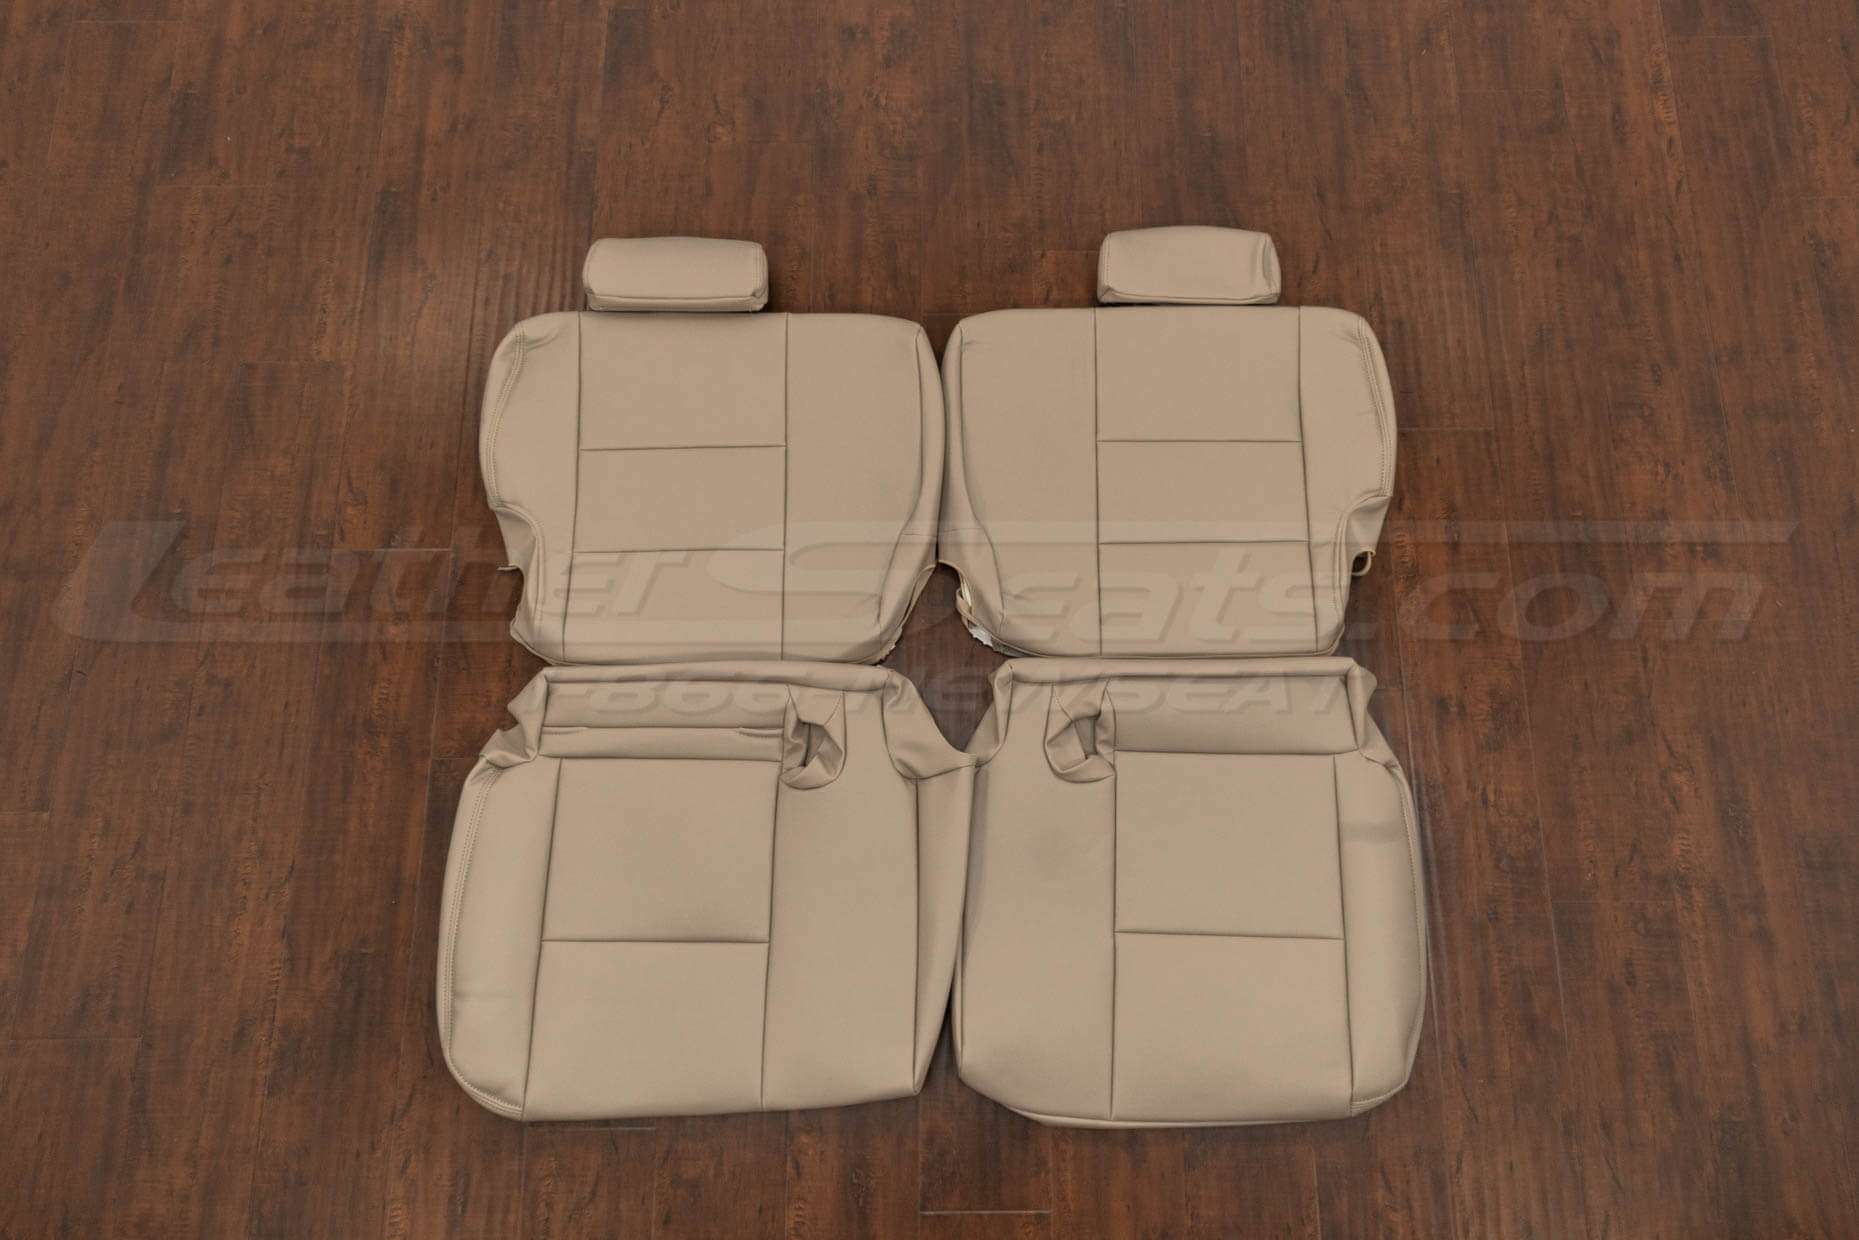 2001-2004 Toyota Sequoia Leather Seat Kit - Adobe - Third Row upholstery